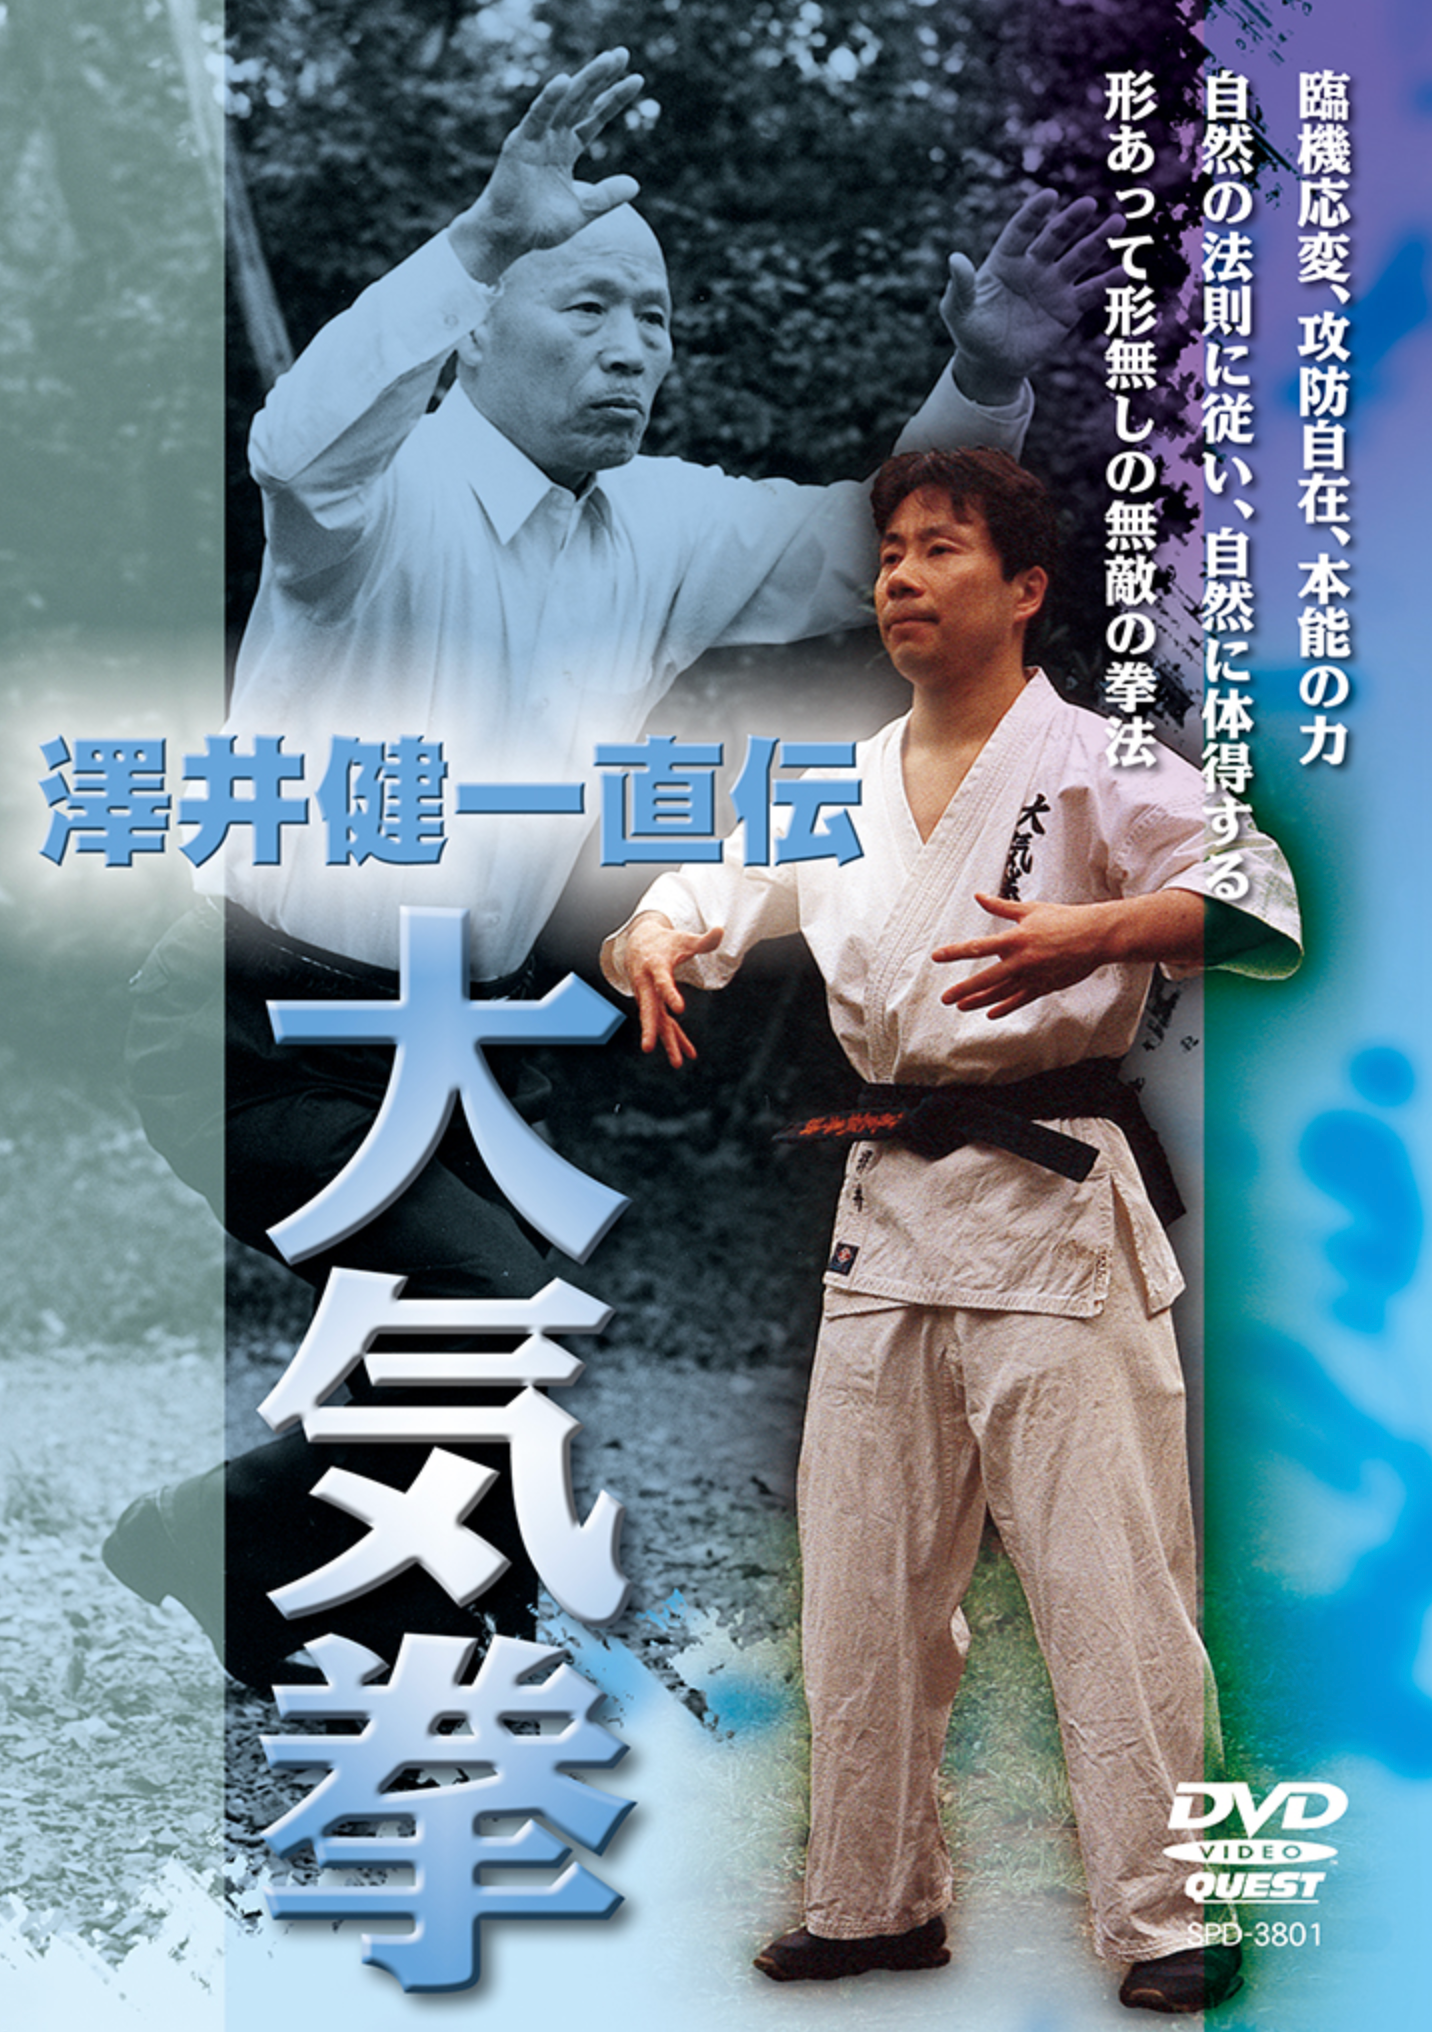 Taikiken DVD by Kenichi Sawai & Hiroshi Iijima - Budovideos Inc